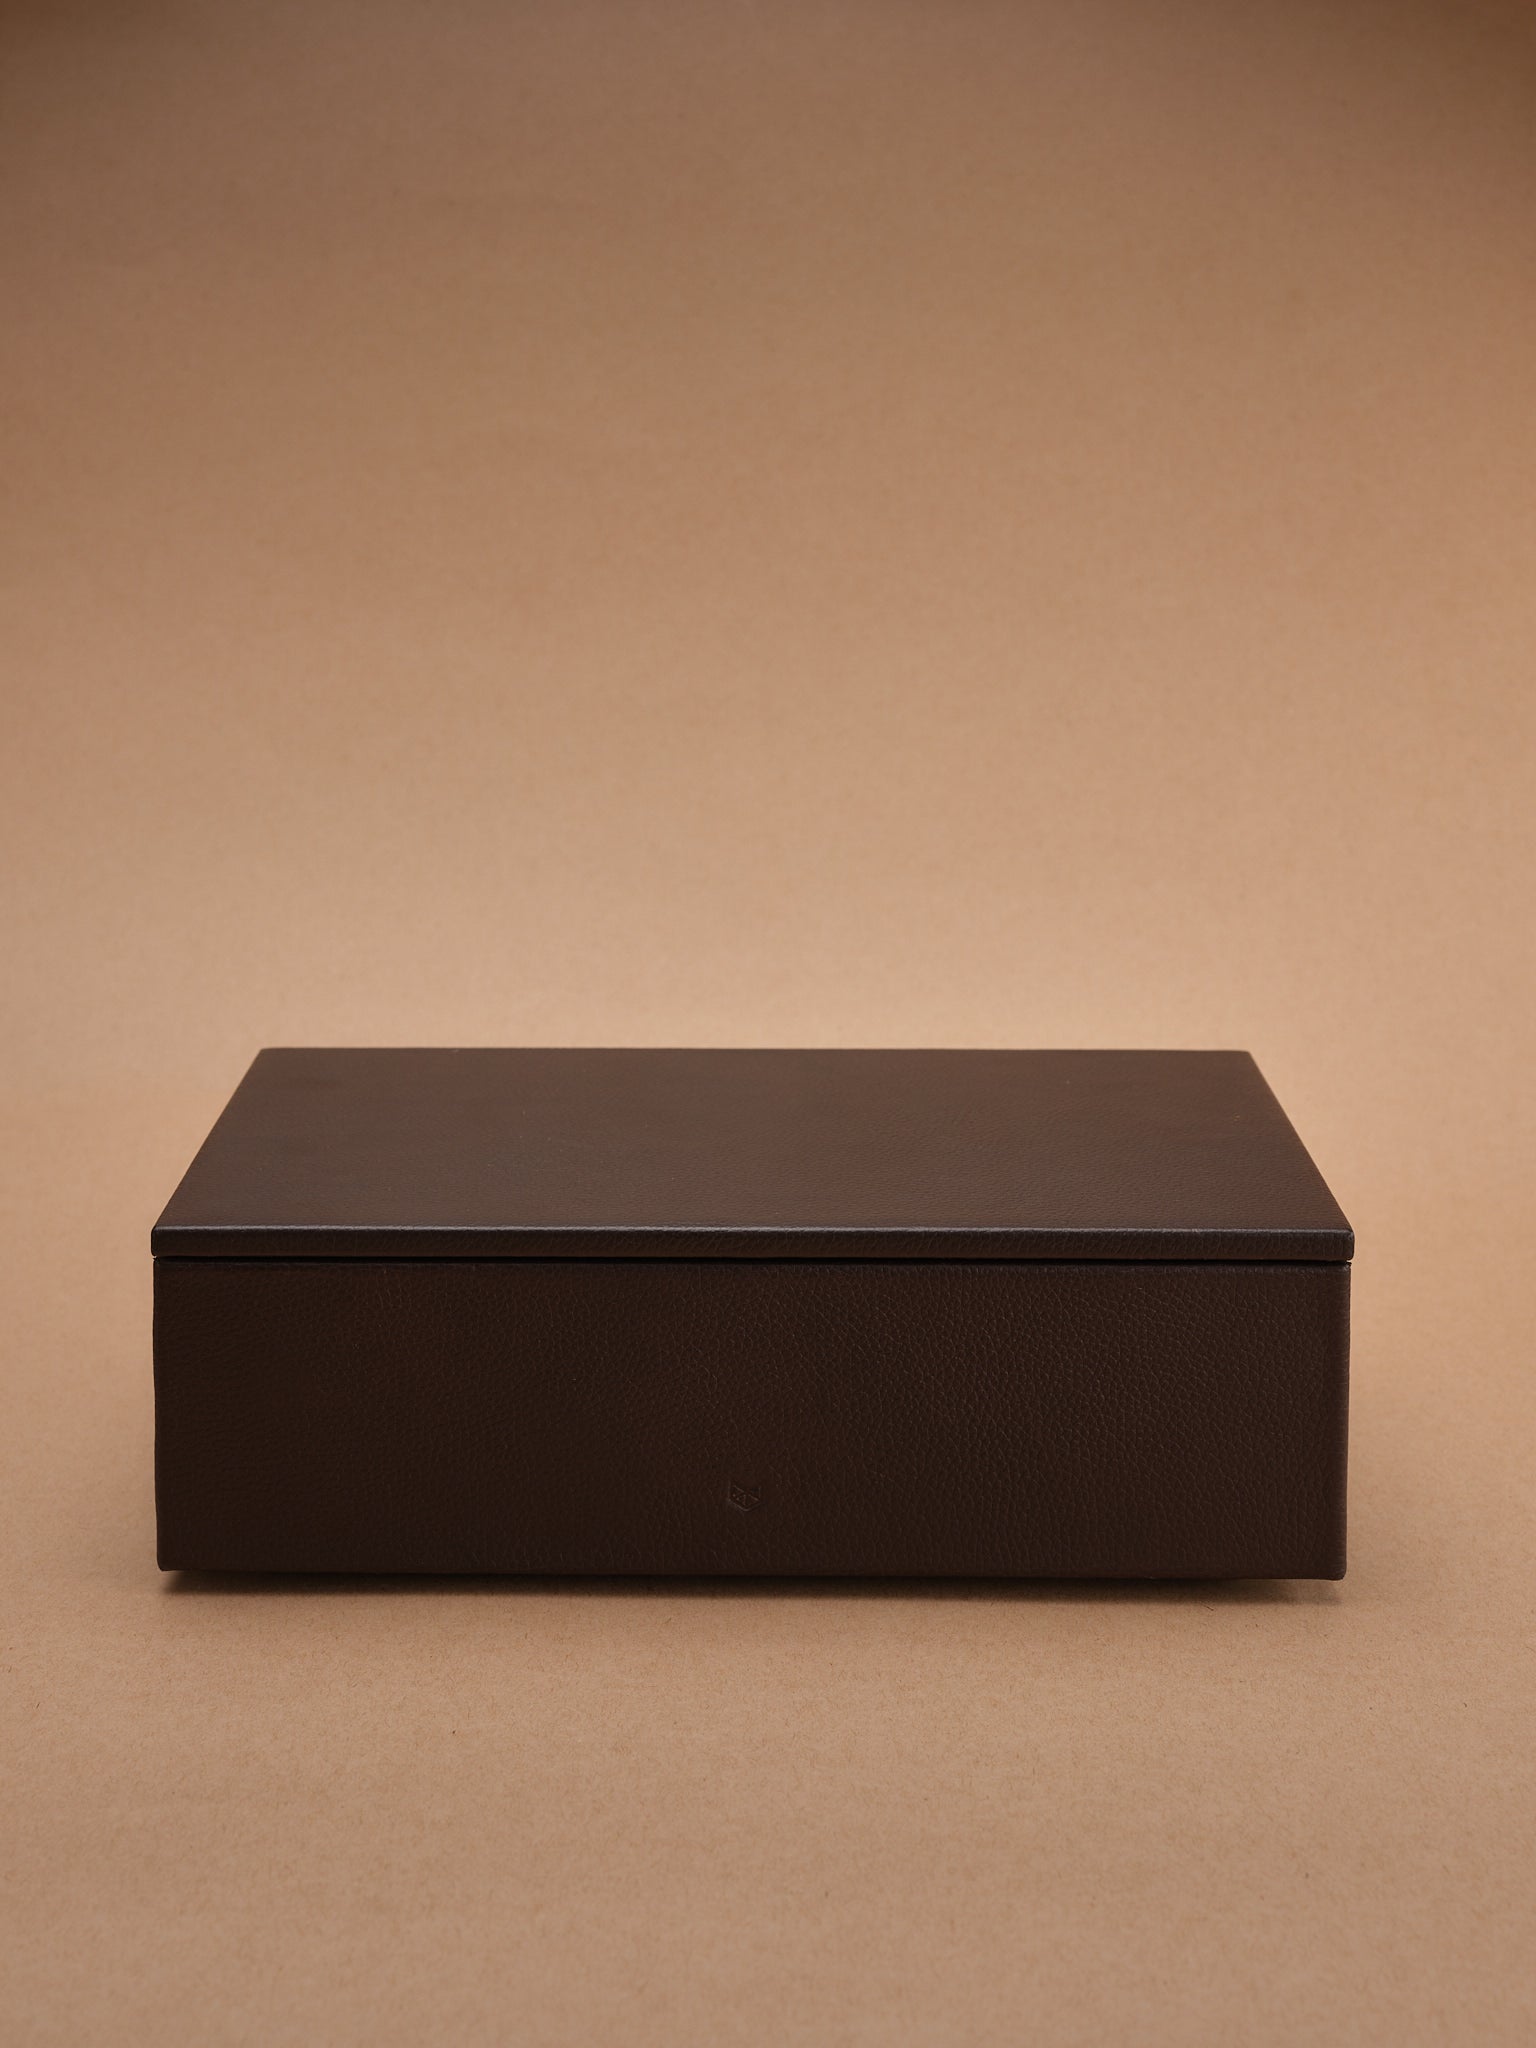 Designer Watch Case. Large Watch Box Dark Brown by Capra Leather